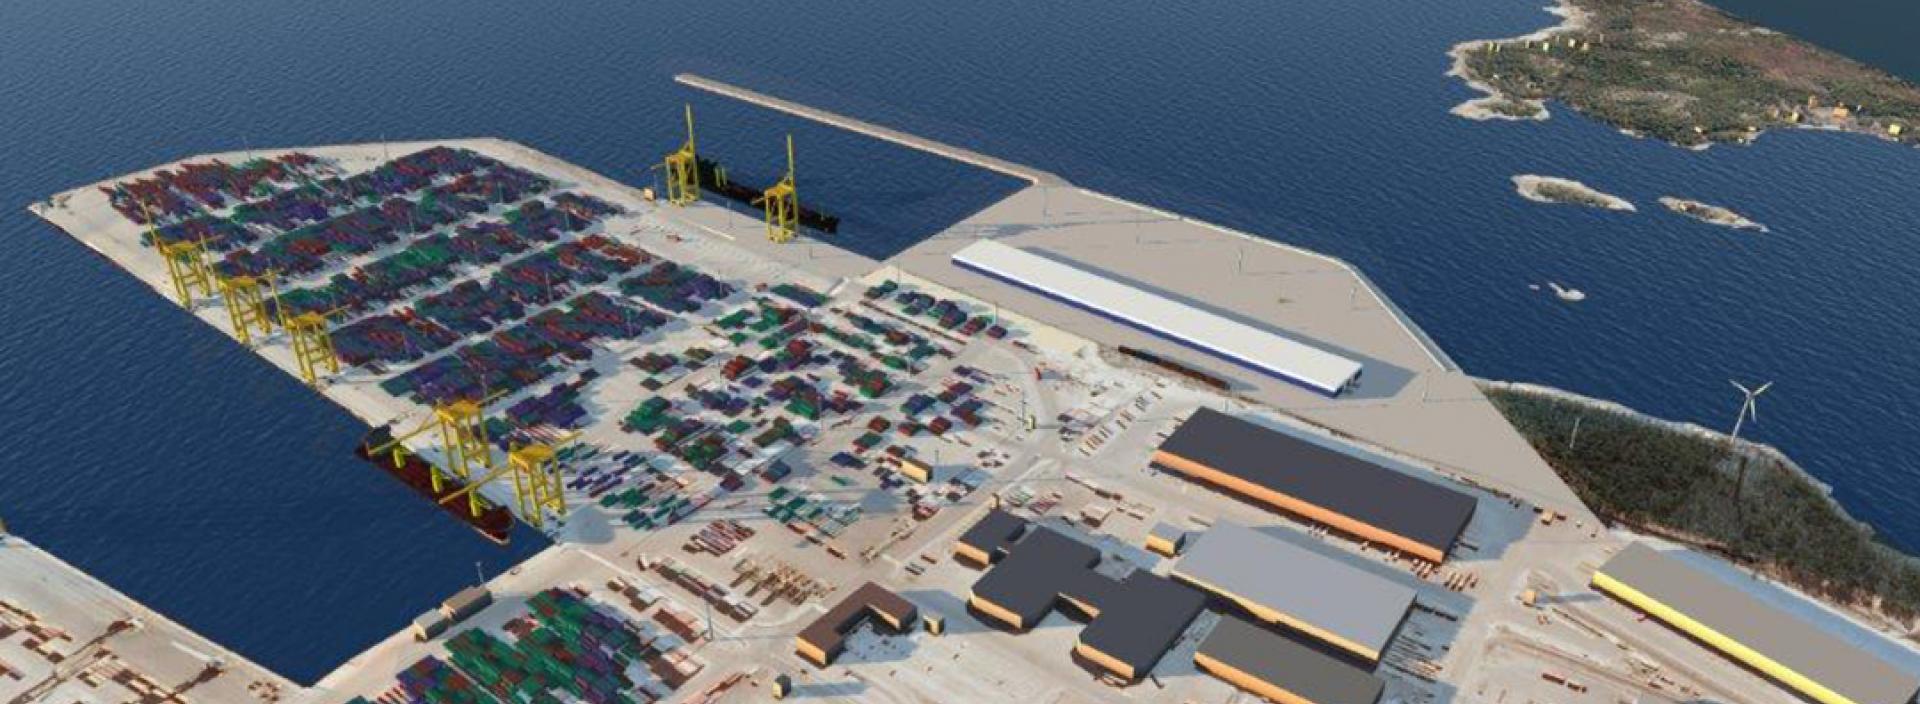 Port of HaminaKotka Main image Highlights D-area 2018